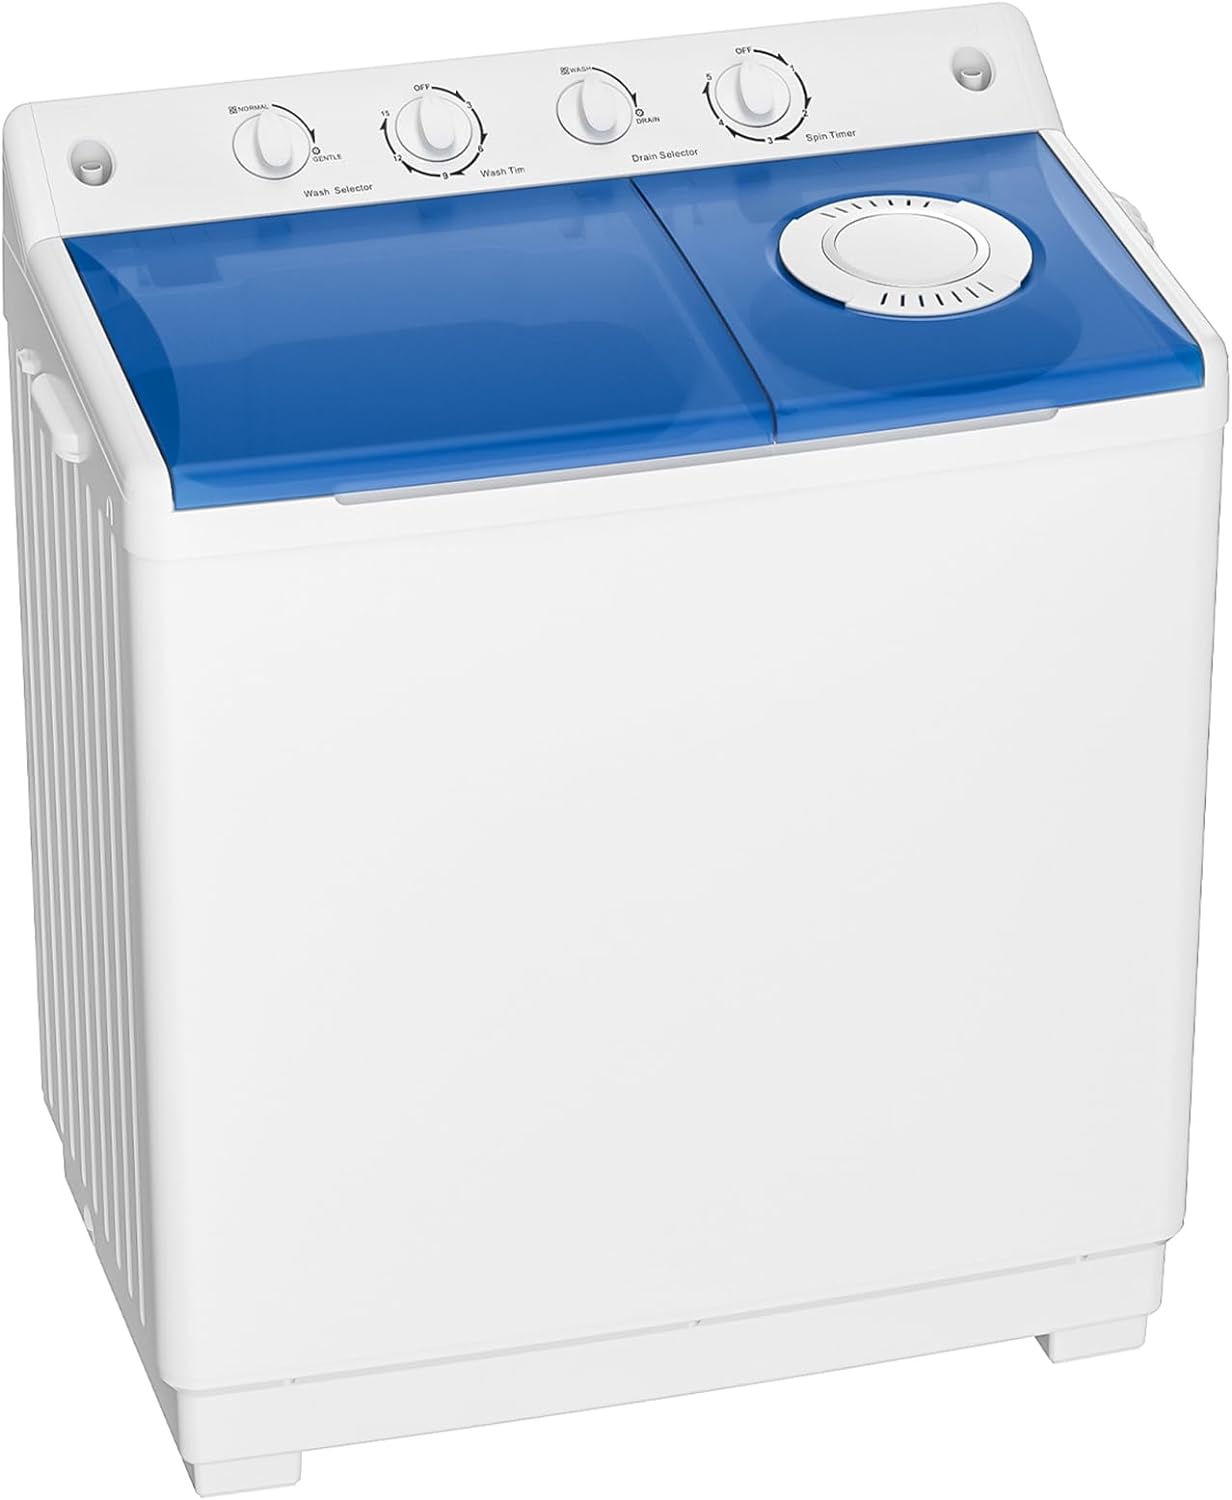 Best AEG Washing Machine: Top Picks for Efficient Laundry Days